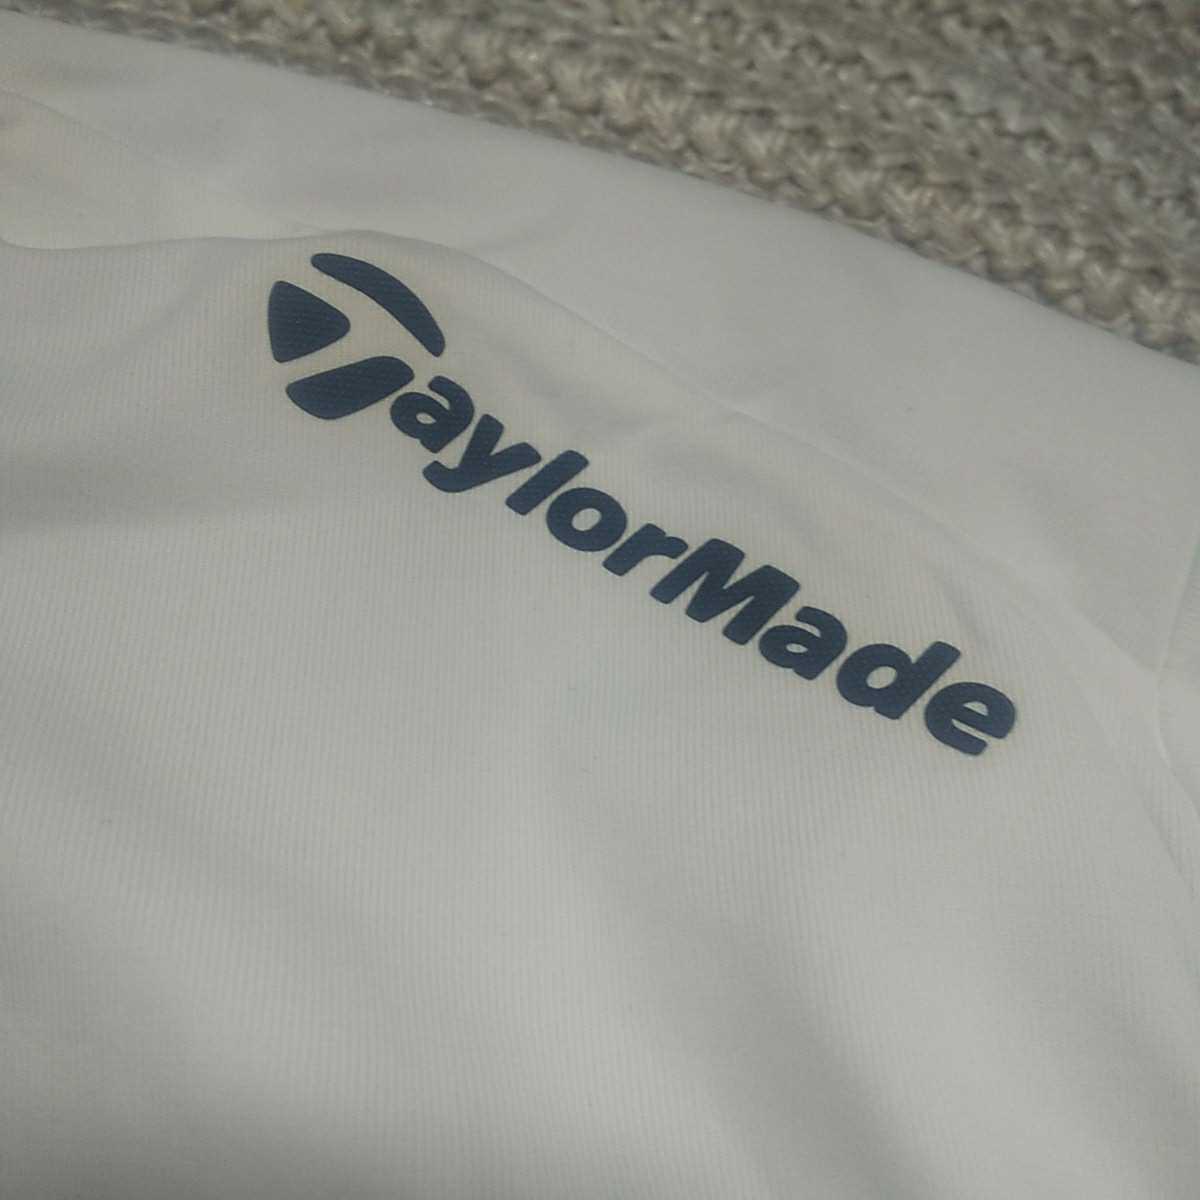  new goods regular price 15400 TAILORMADE TaylorMade polo-shirt with short sleeves XO stretch . sweat speed . regular goods Golf men's 